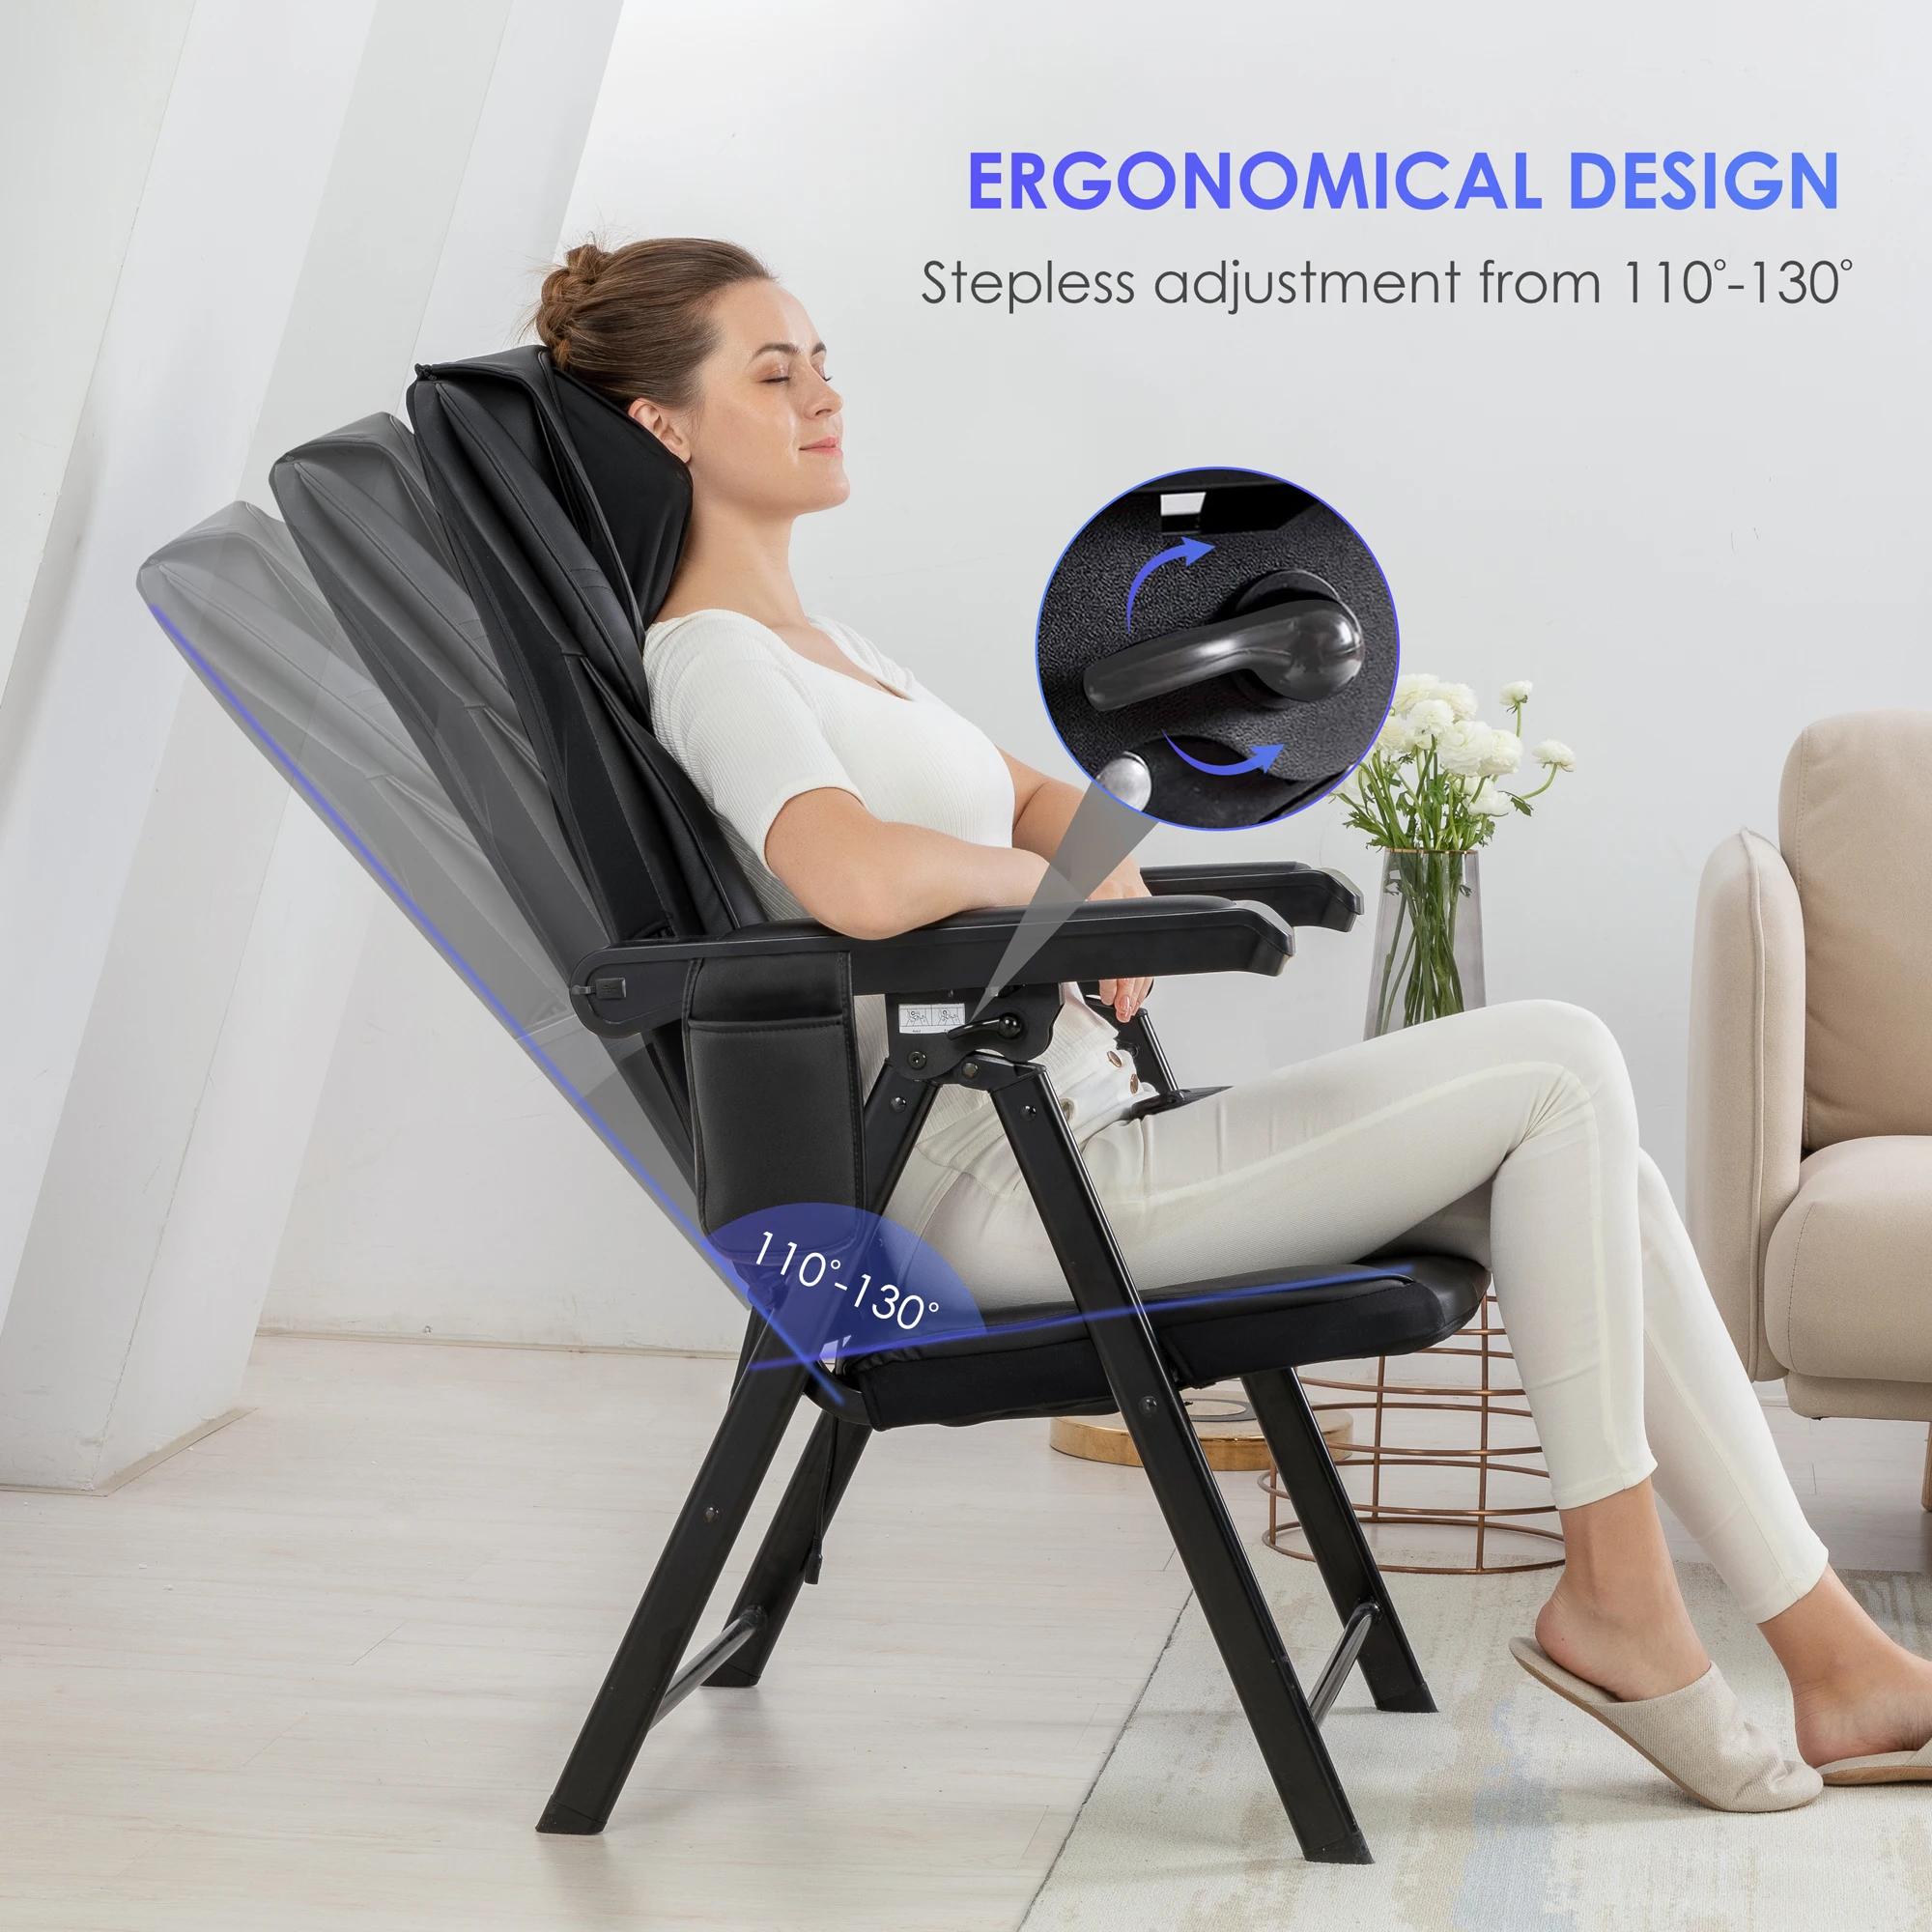 Comfier Neck & Back Massager with Heat - Shiatsu Massage Chair Pad  Portable, New